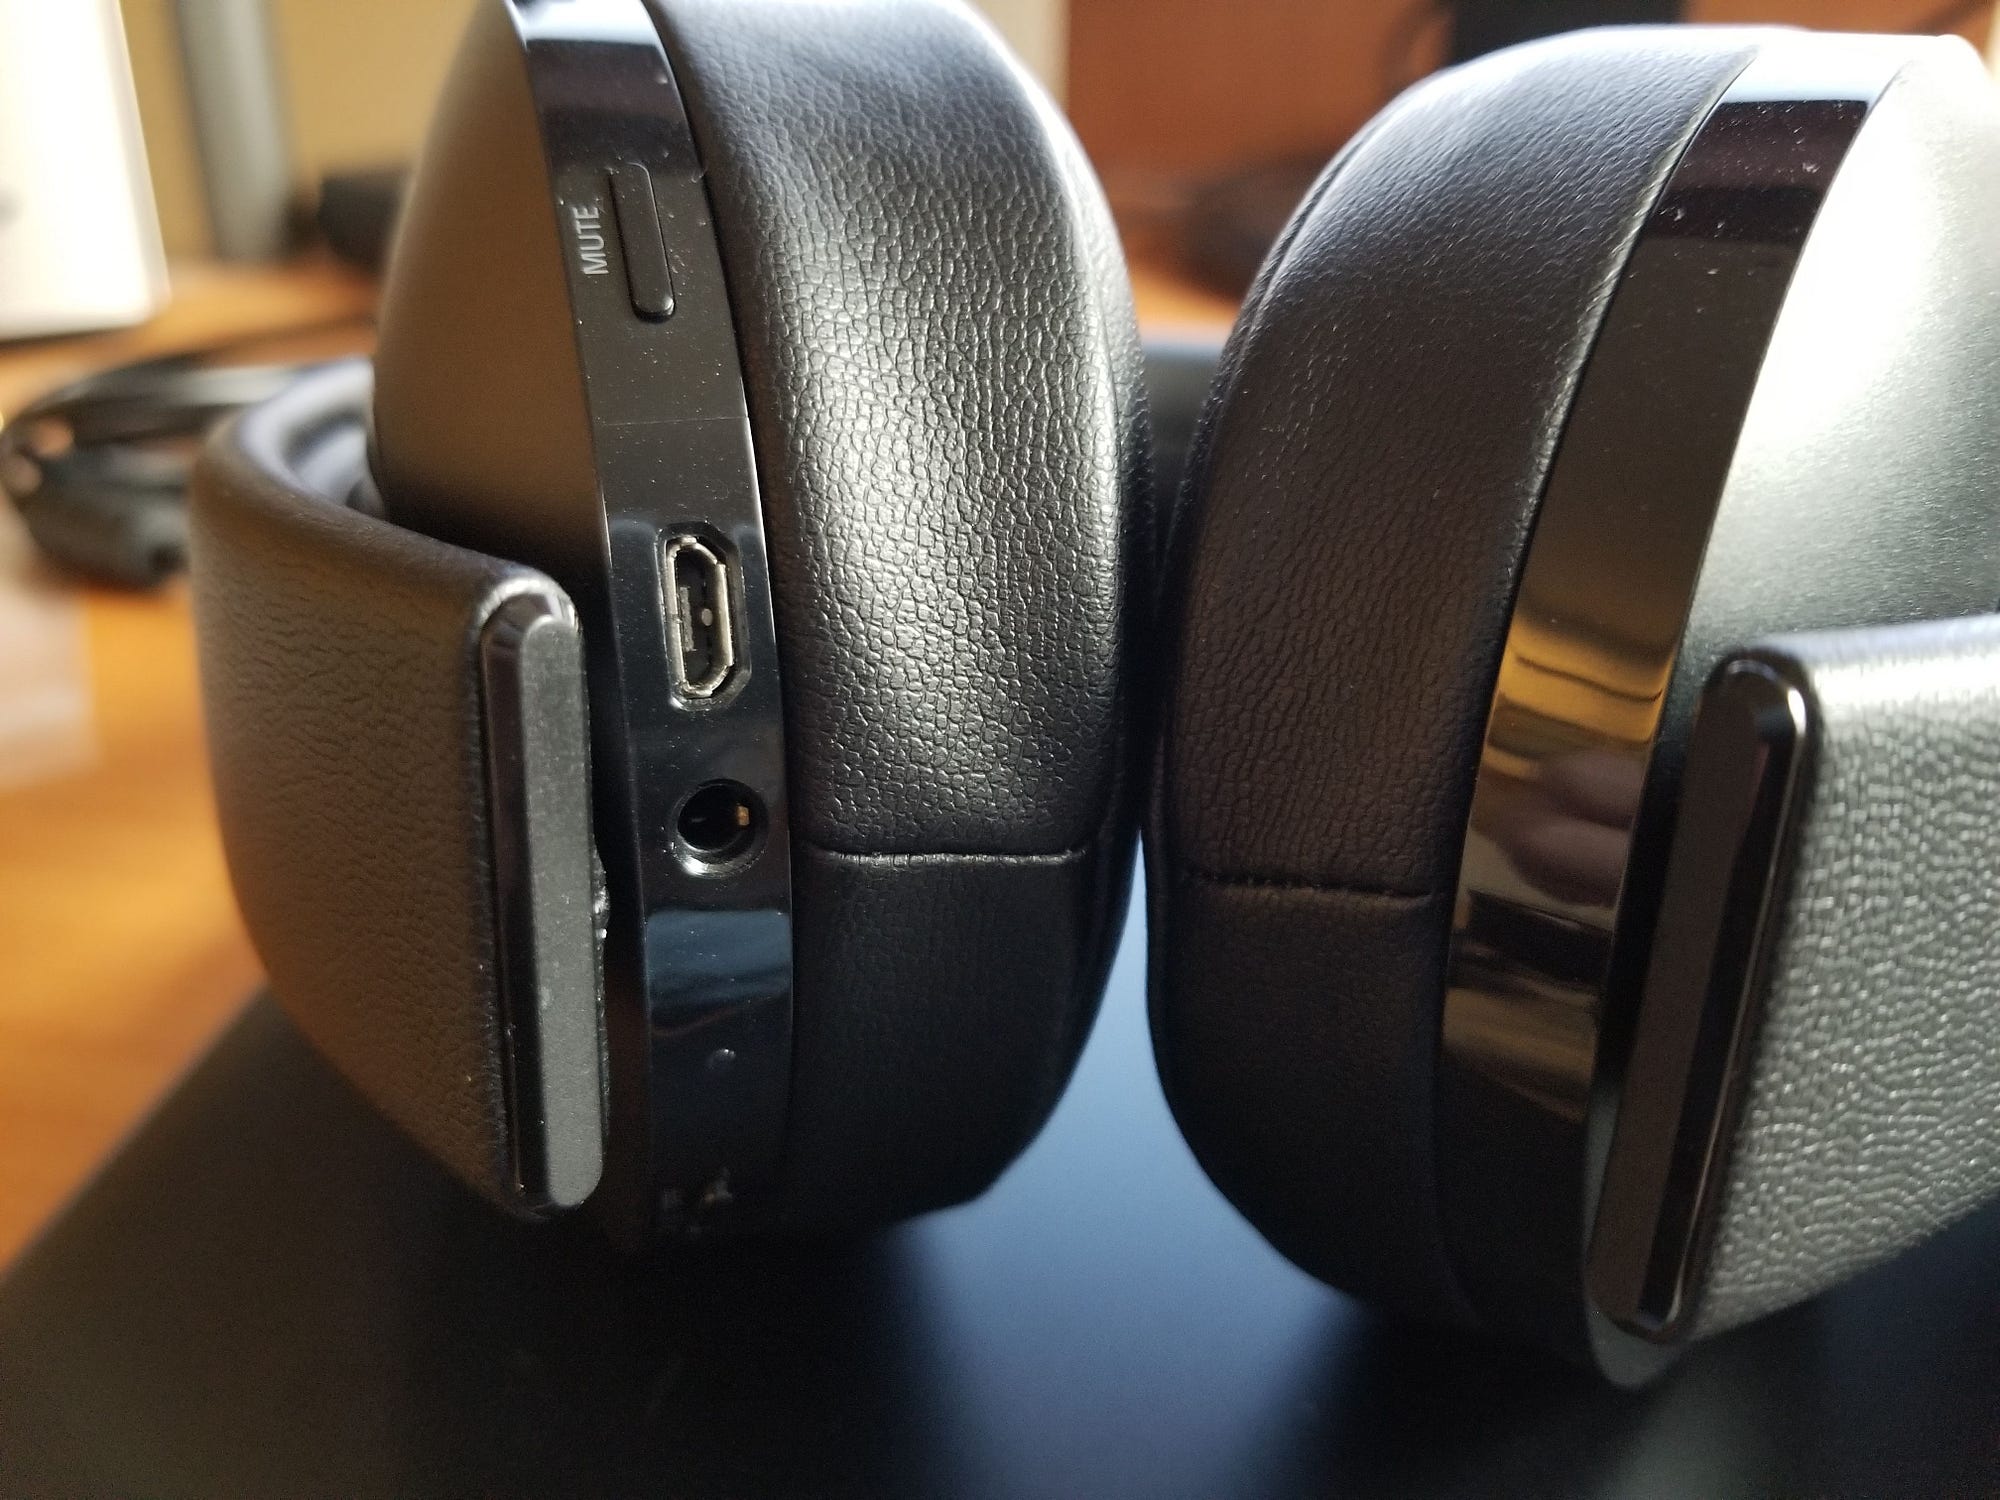 Gaming Headset Showdown: New Gold Wireless Headset VS Platinum Headset | by  Alex Rowe | Medium